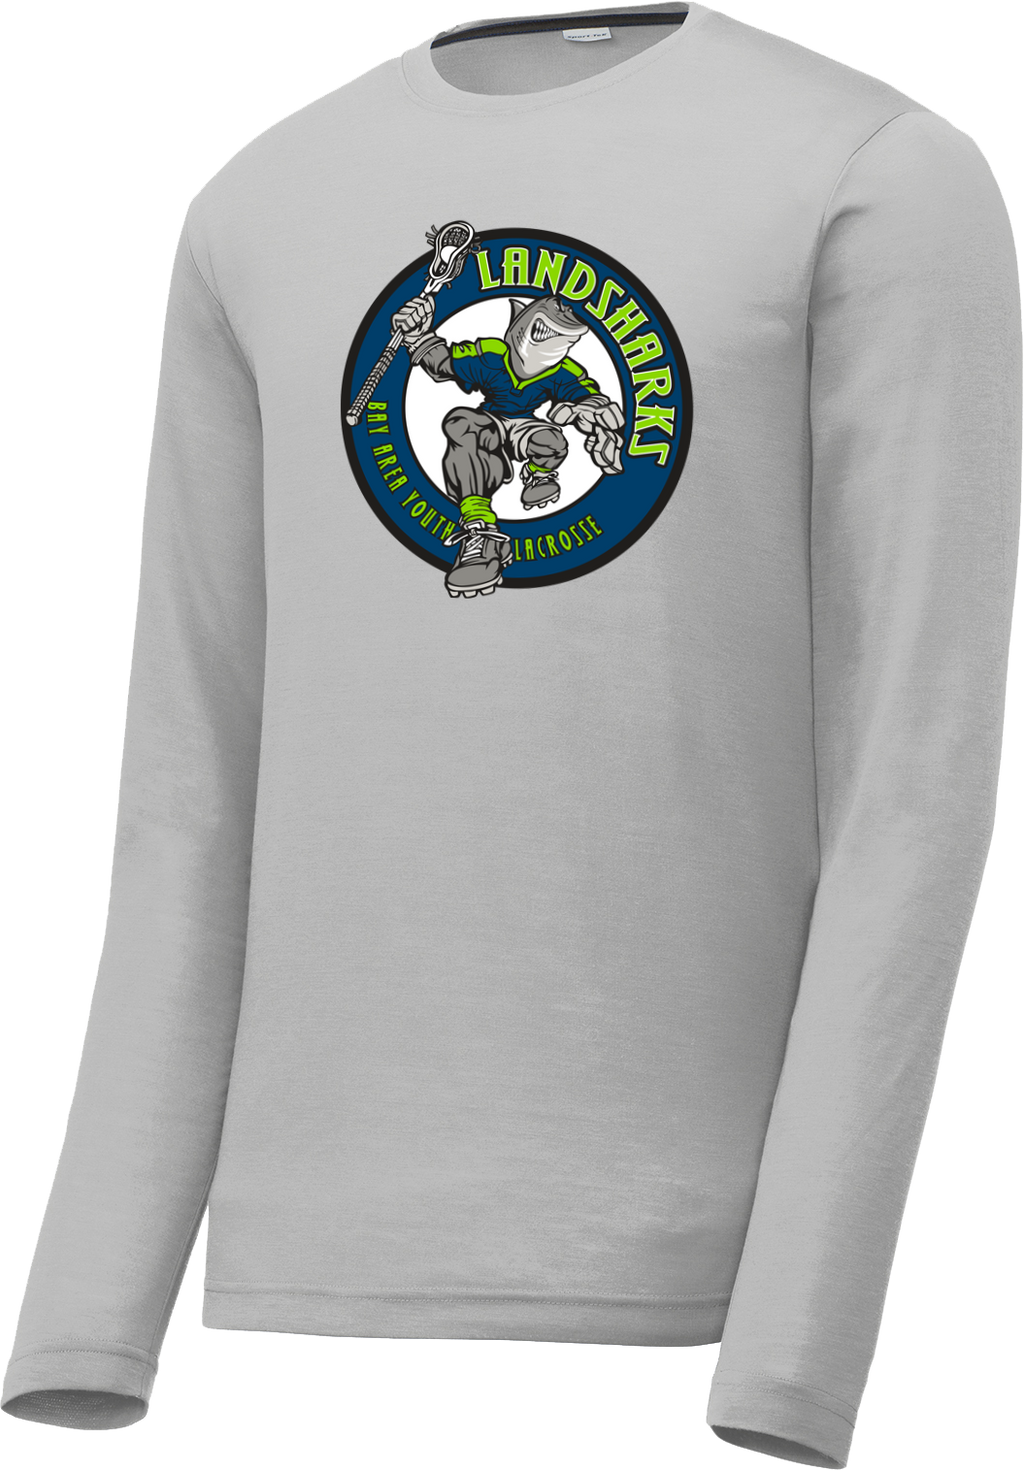 Bay Area Landsharks Grey Long Sleeve CottonTouch Performance Shirt